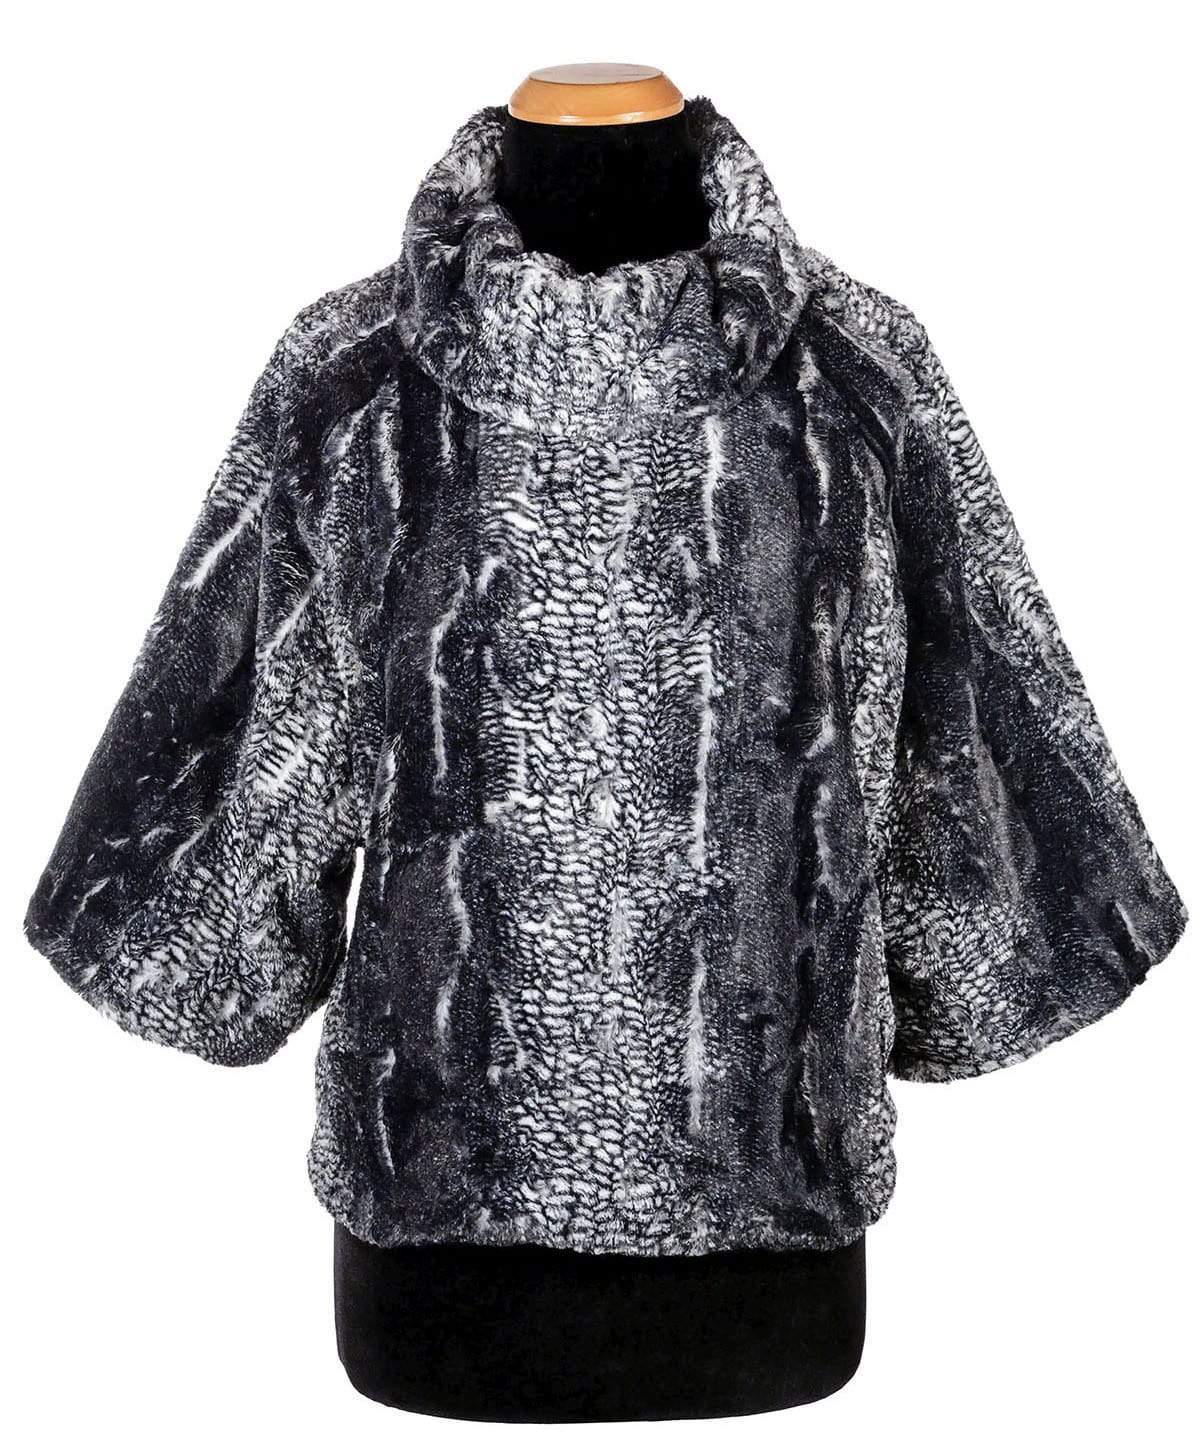 Sweater Top - Luxury Faux Fur in Black Mamba